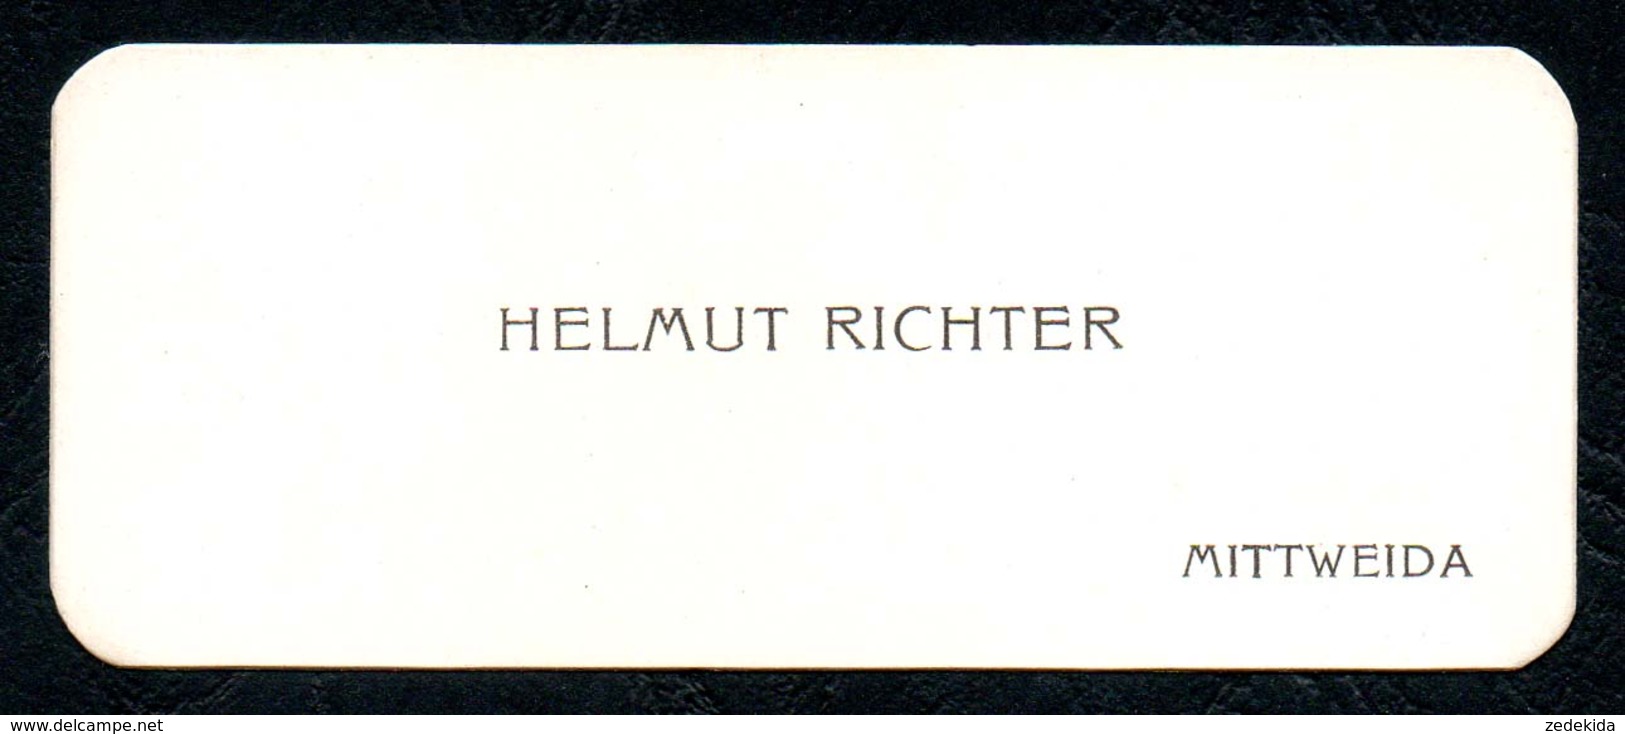 B7274 - Mittweida - Helmut Richter - Visitenkarte - Visitenkarten